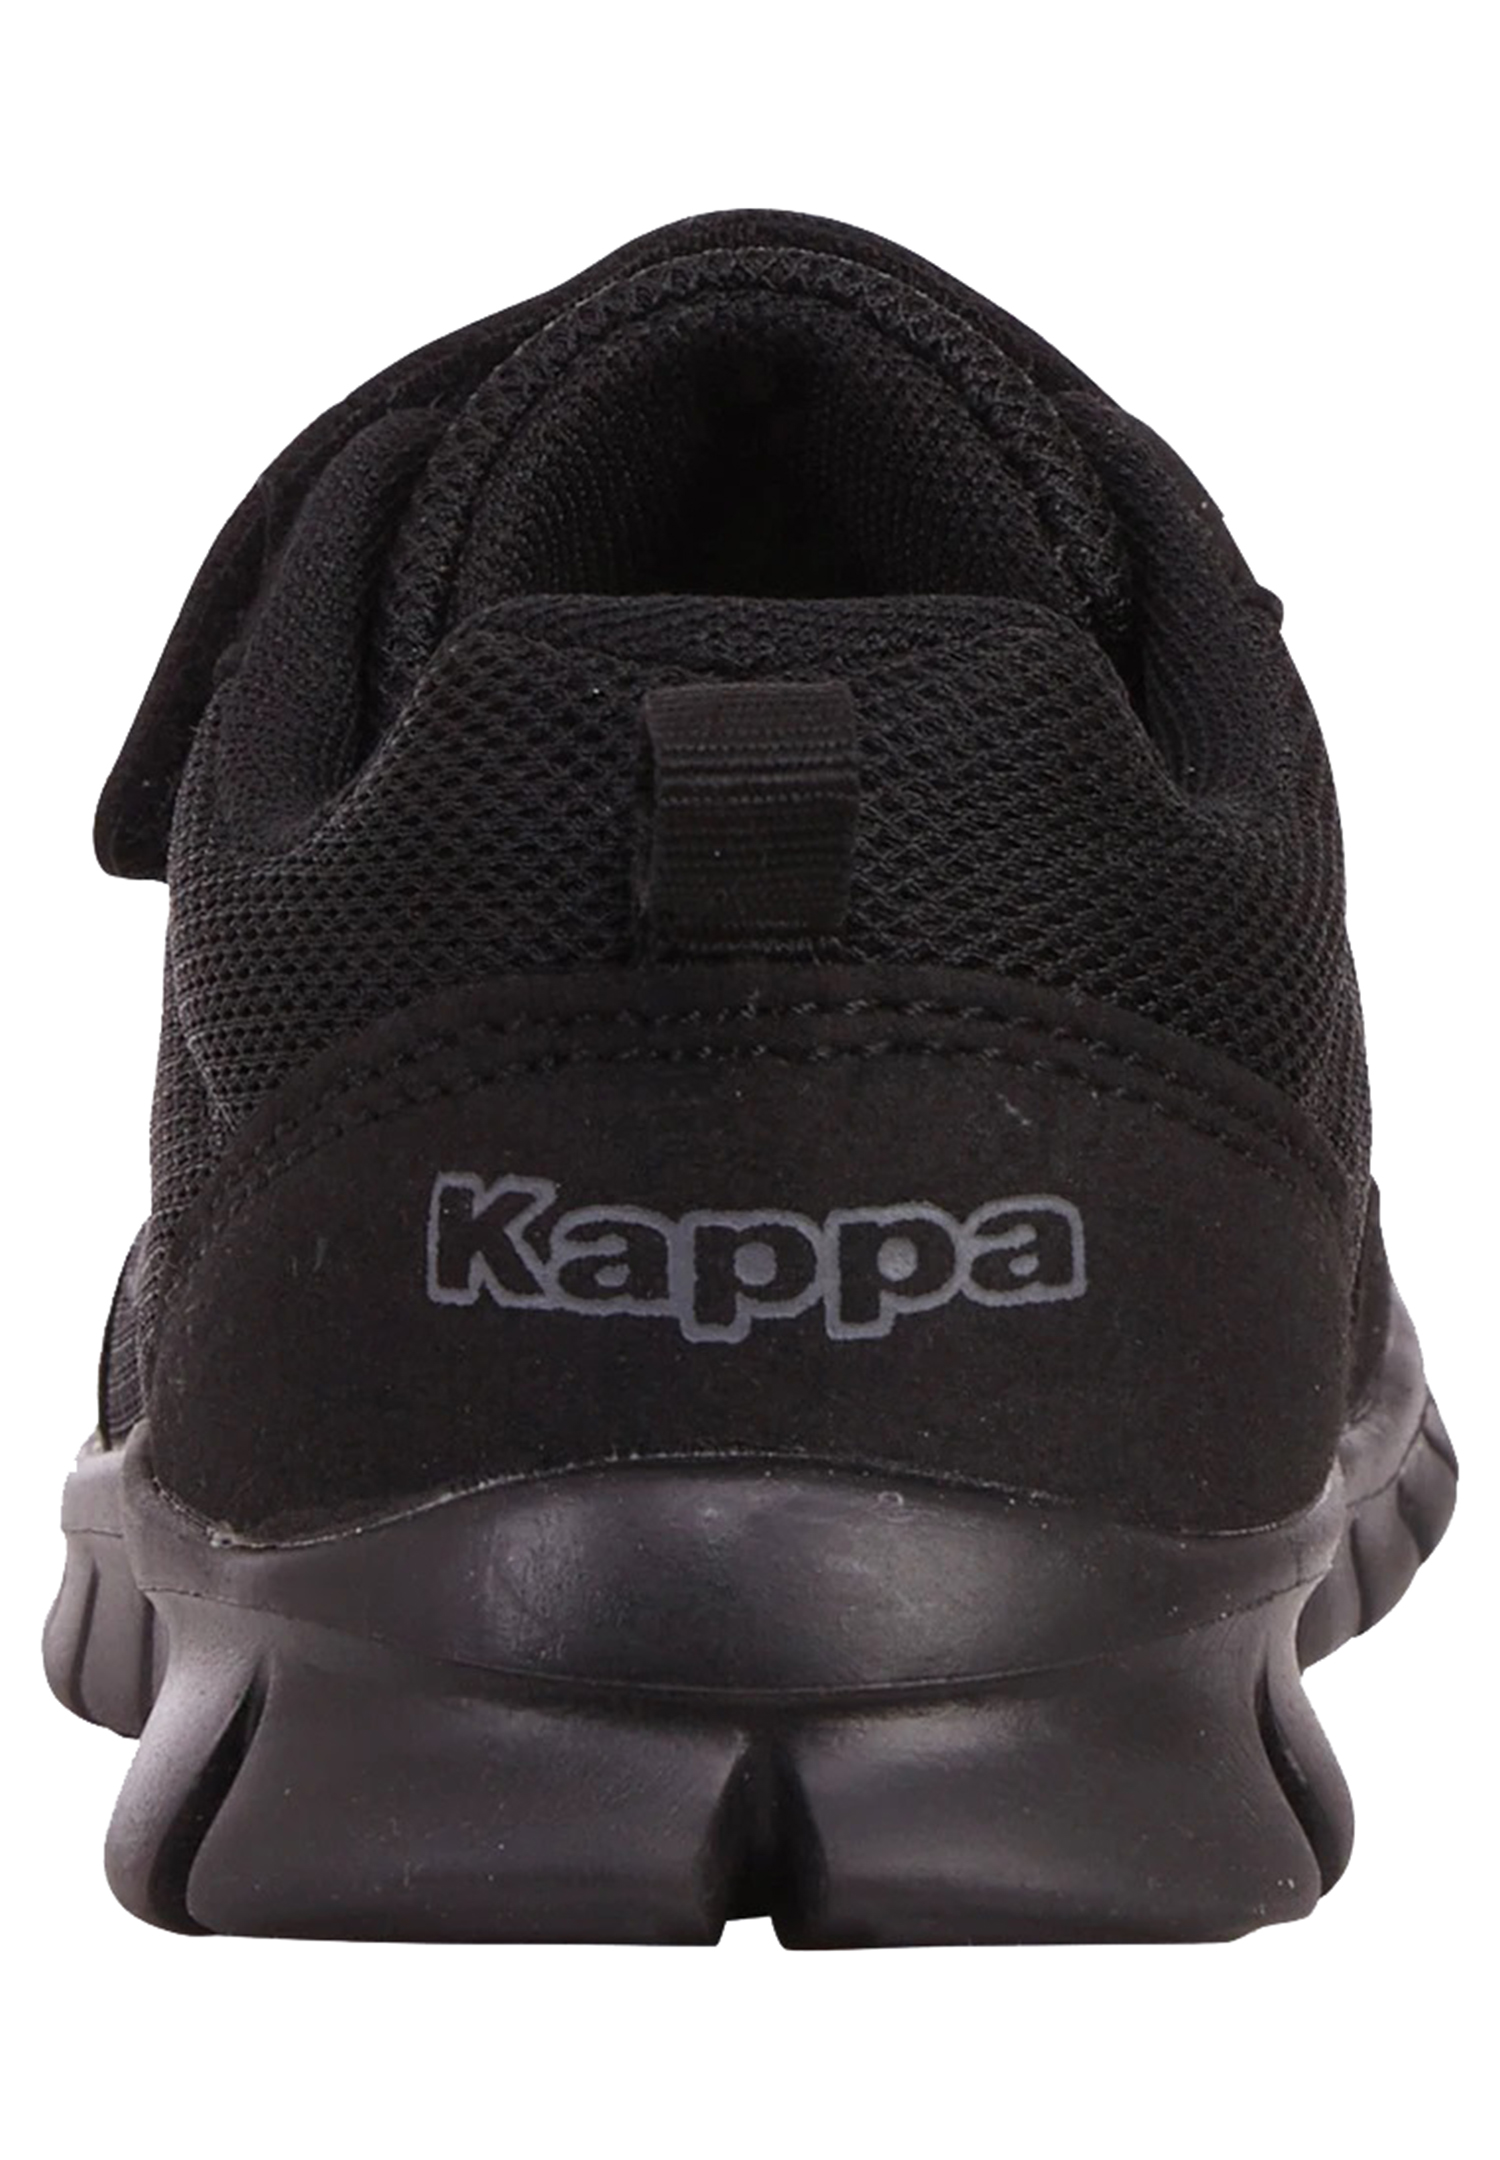 Kappa Unisex Kinder Sneaker Turnschuh 260982OCK 1116 Black